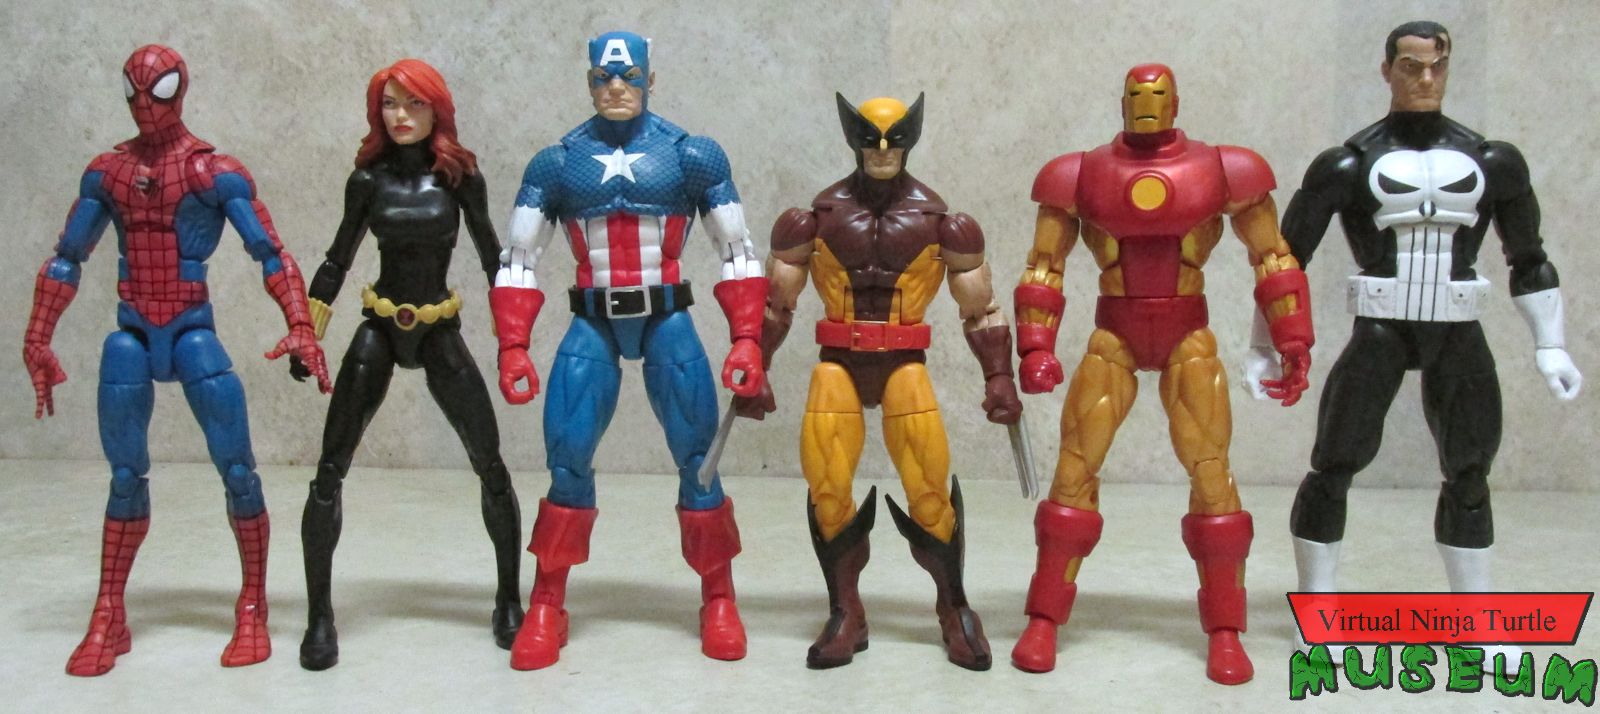 Marvel Legends Retro series group photo